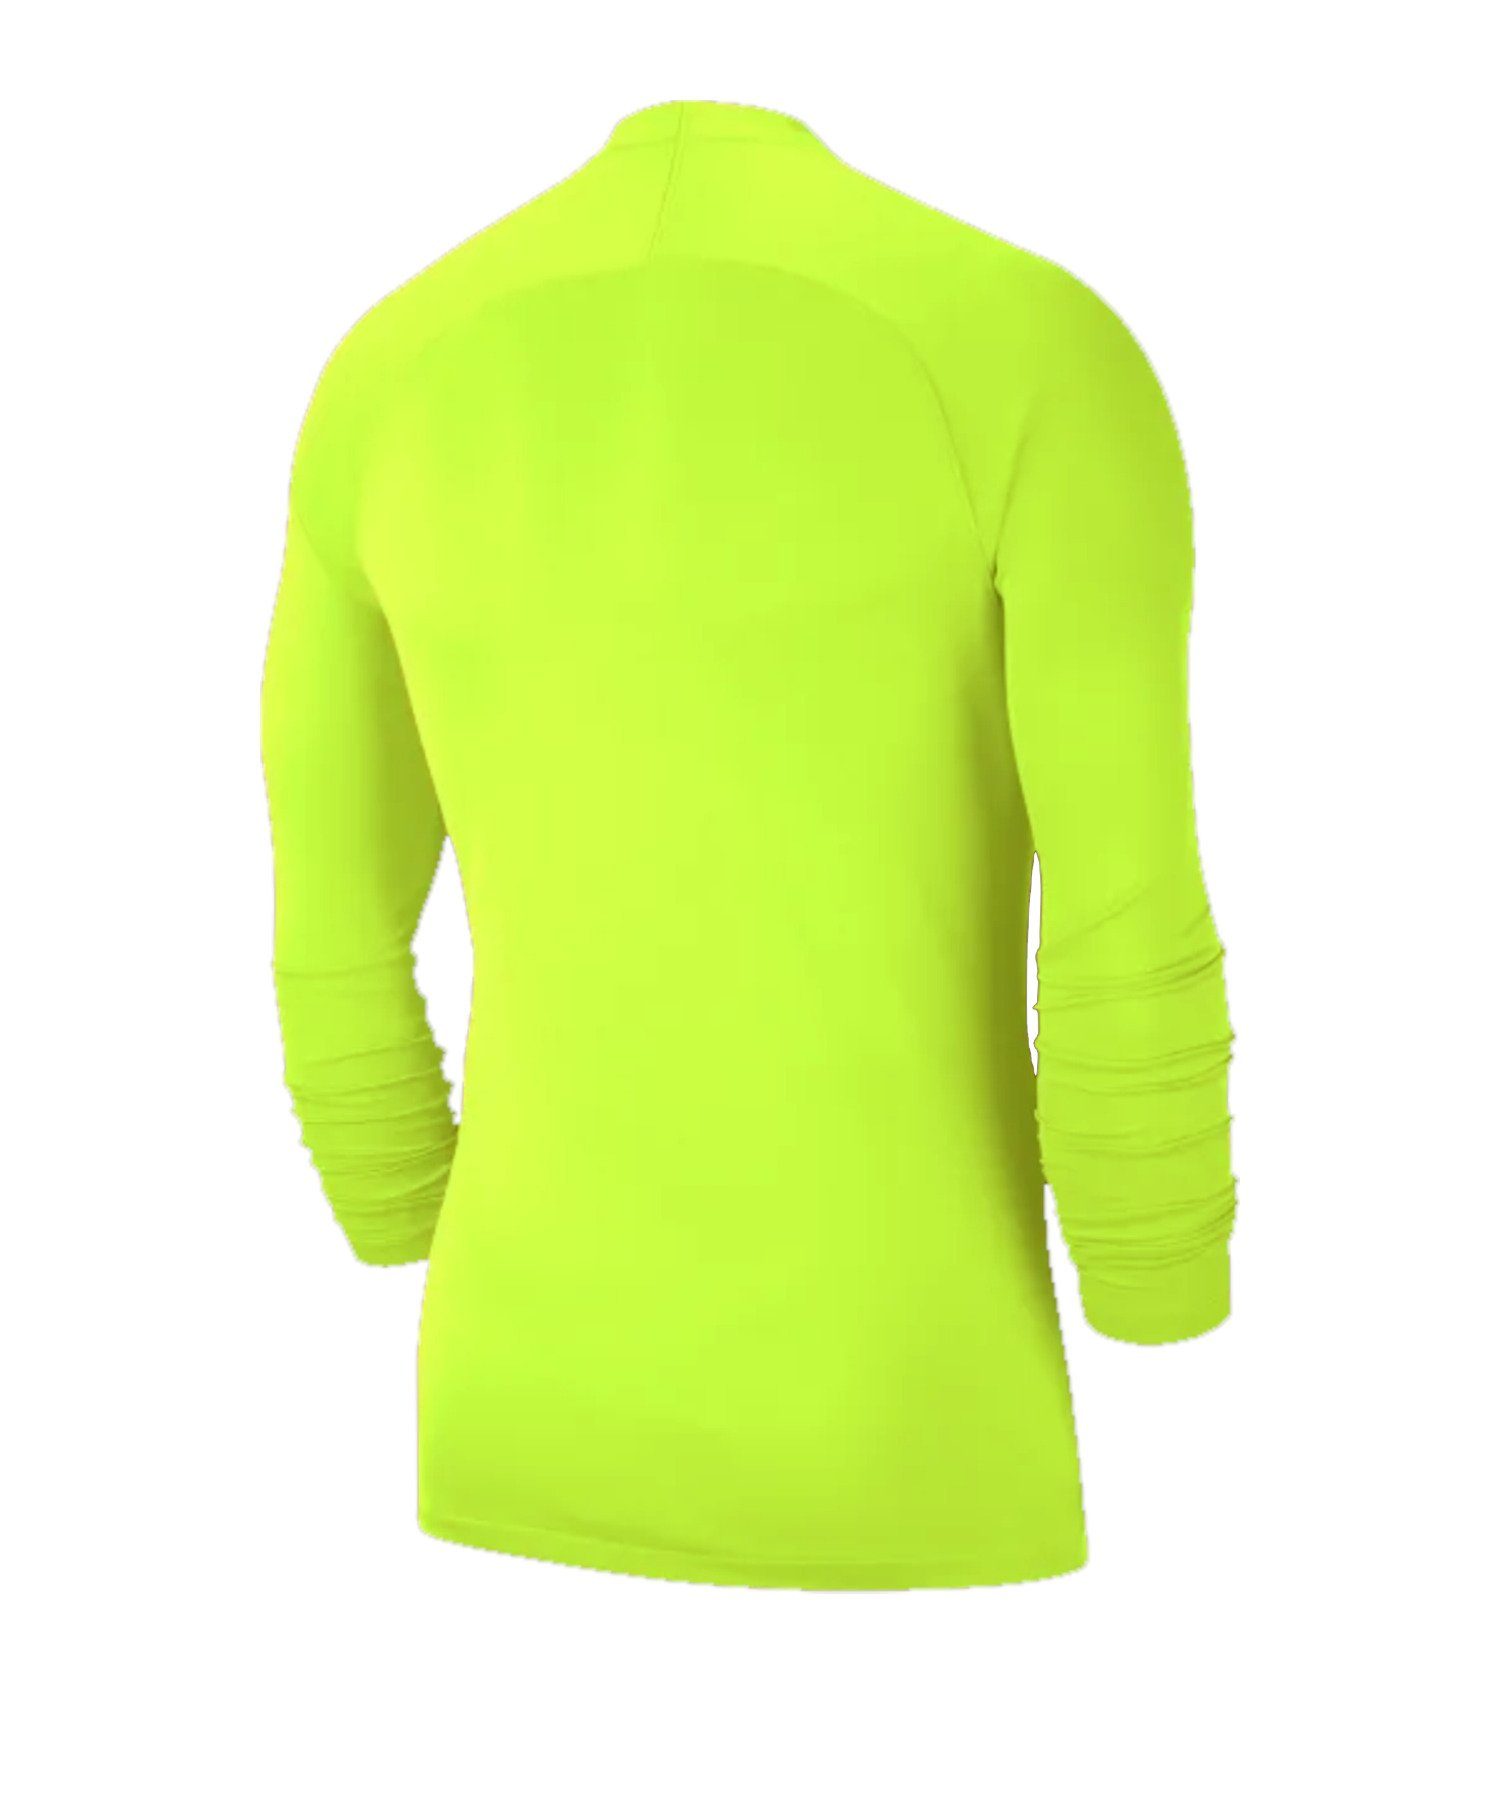 Nike Langarmshirt Funktionsshirt gelb Park Daumenöffnung Layer First